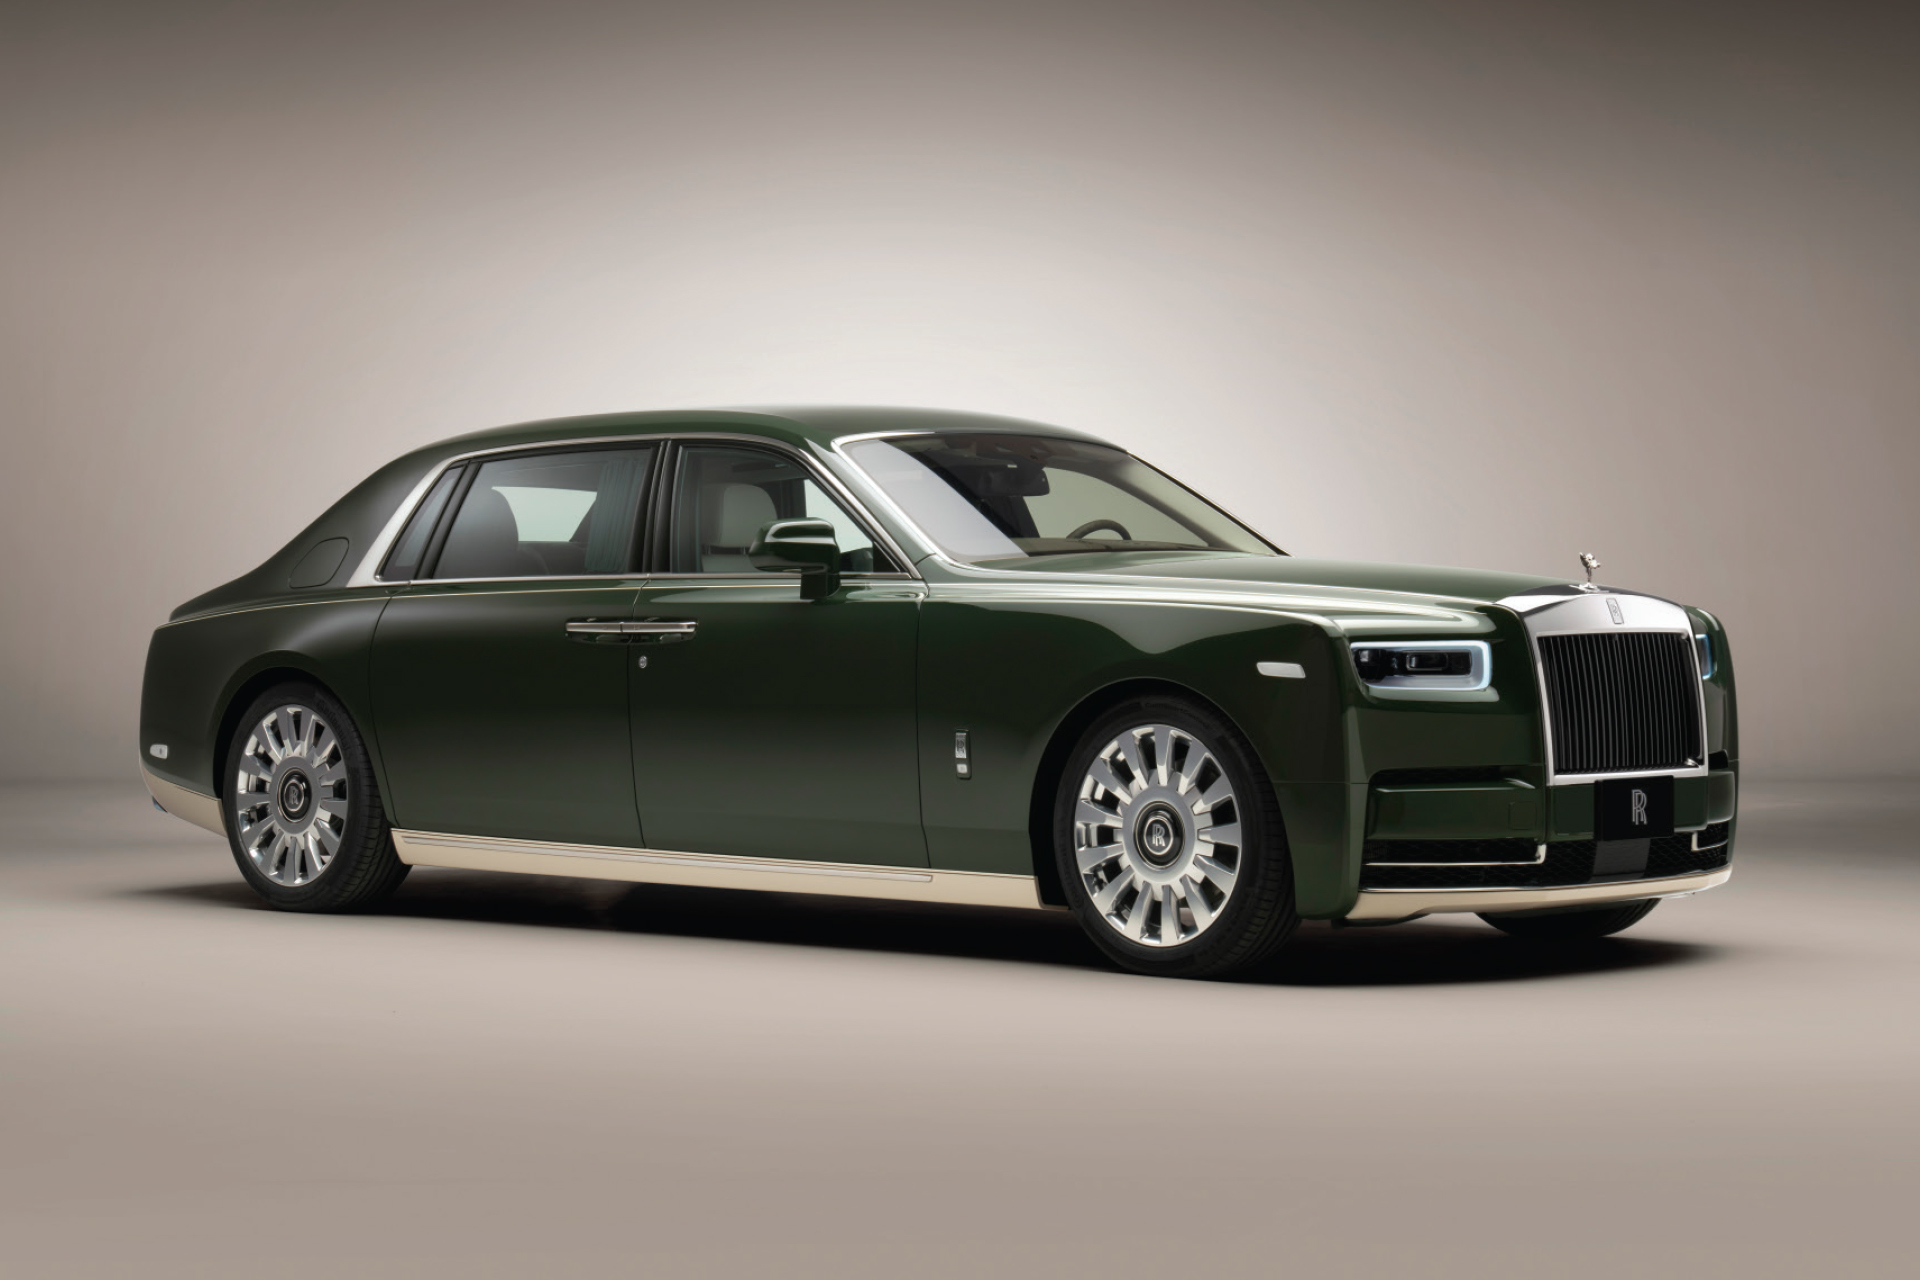  Rolls-Royce and Hermès - Phantom Oribe - M2woman